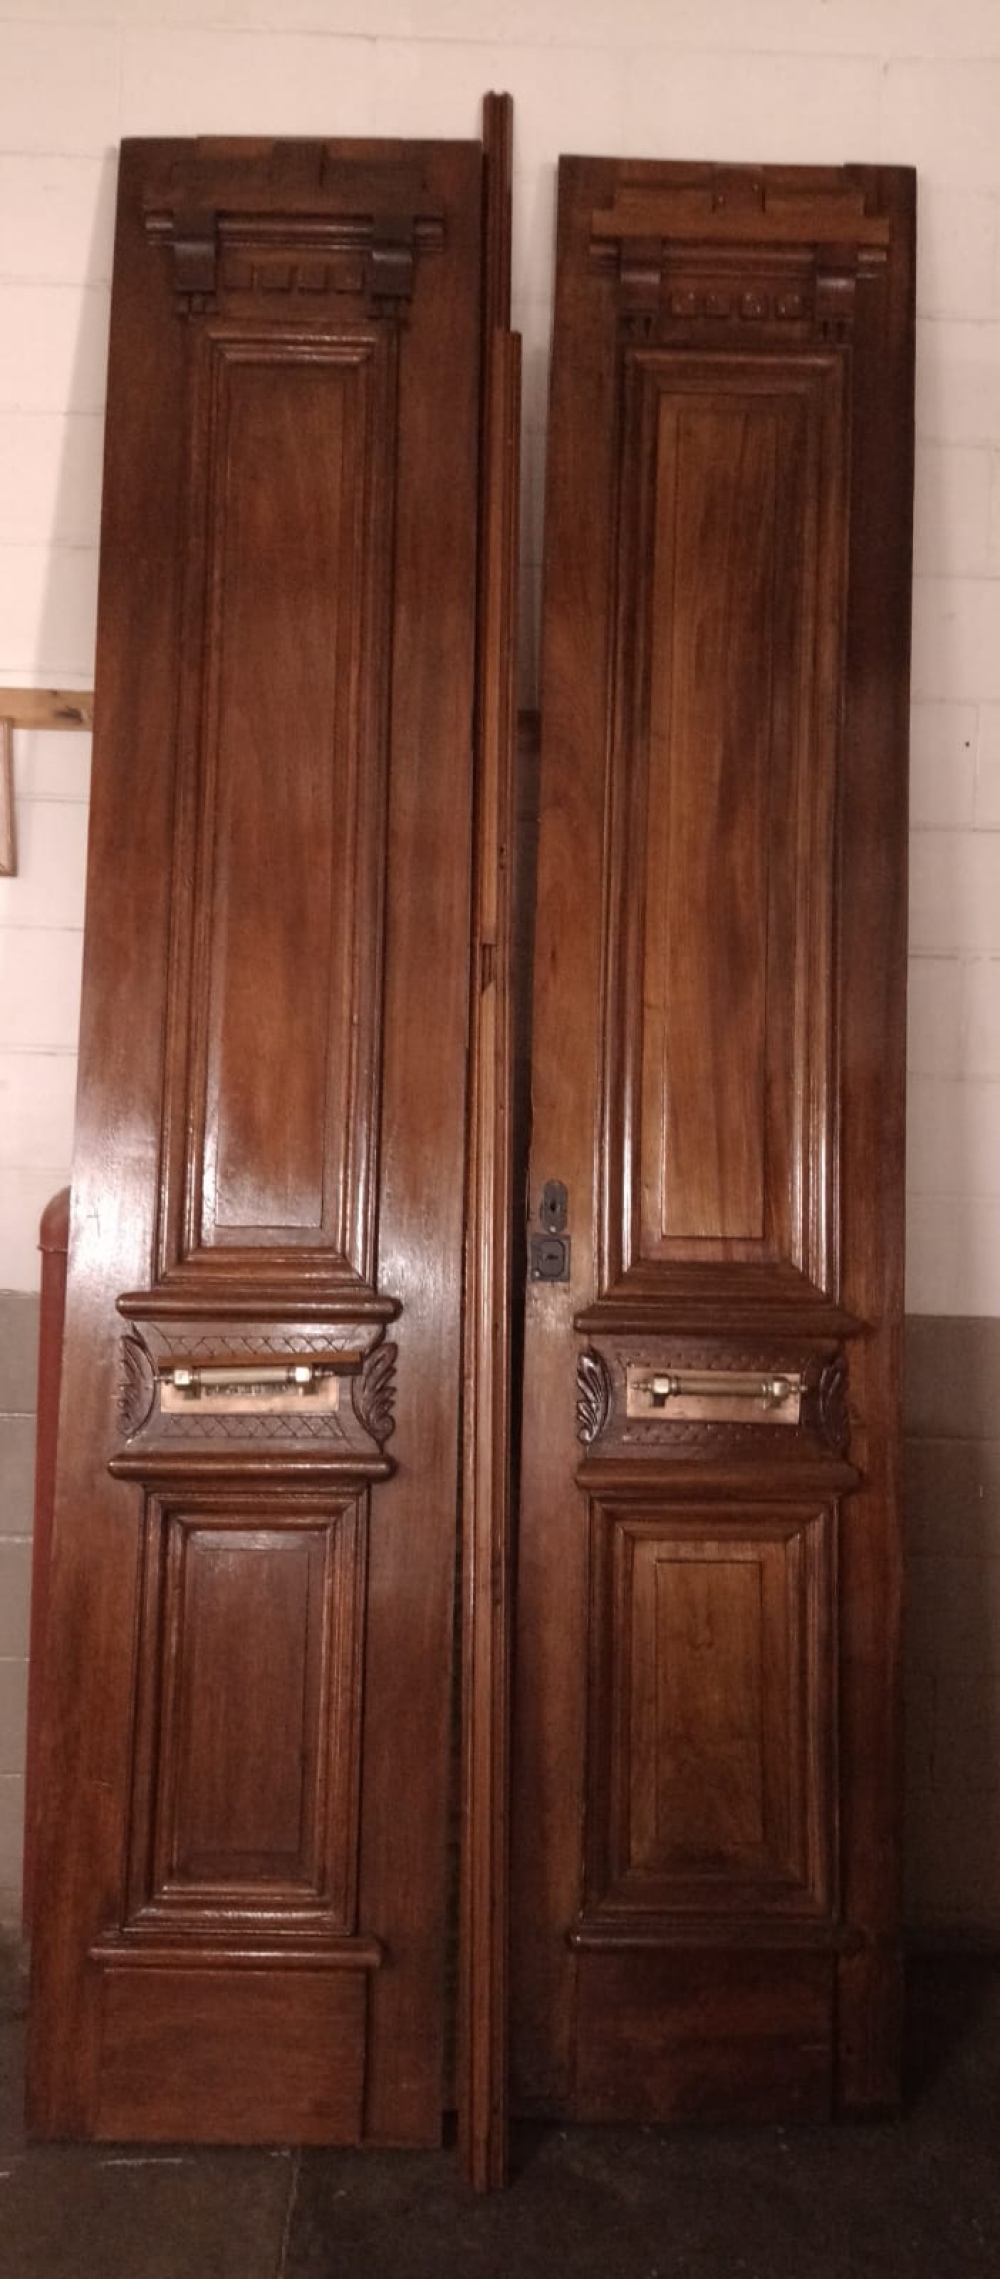 En la cárcel de Saavedra restauraron histórica puerta de madera de la sede municipal